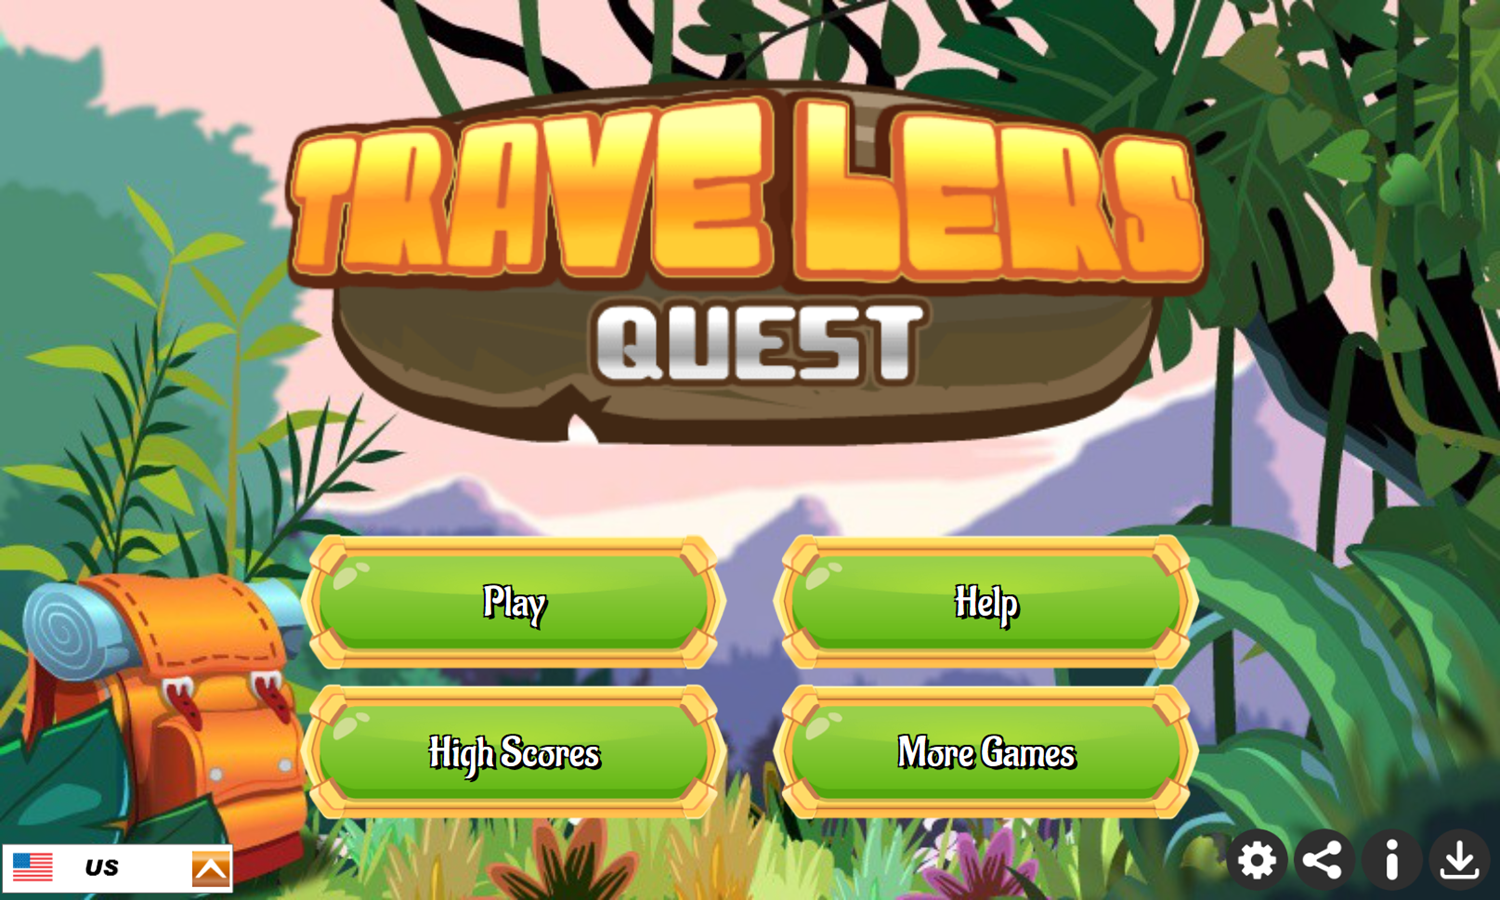 Travelers Quest Game Welcome Screen Screenshot.